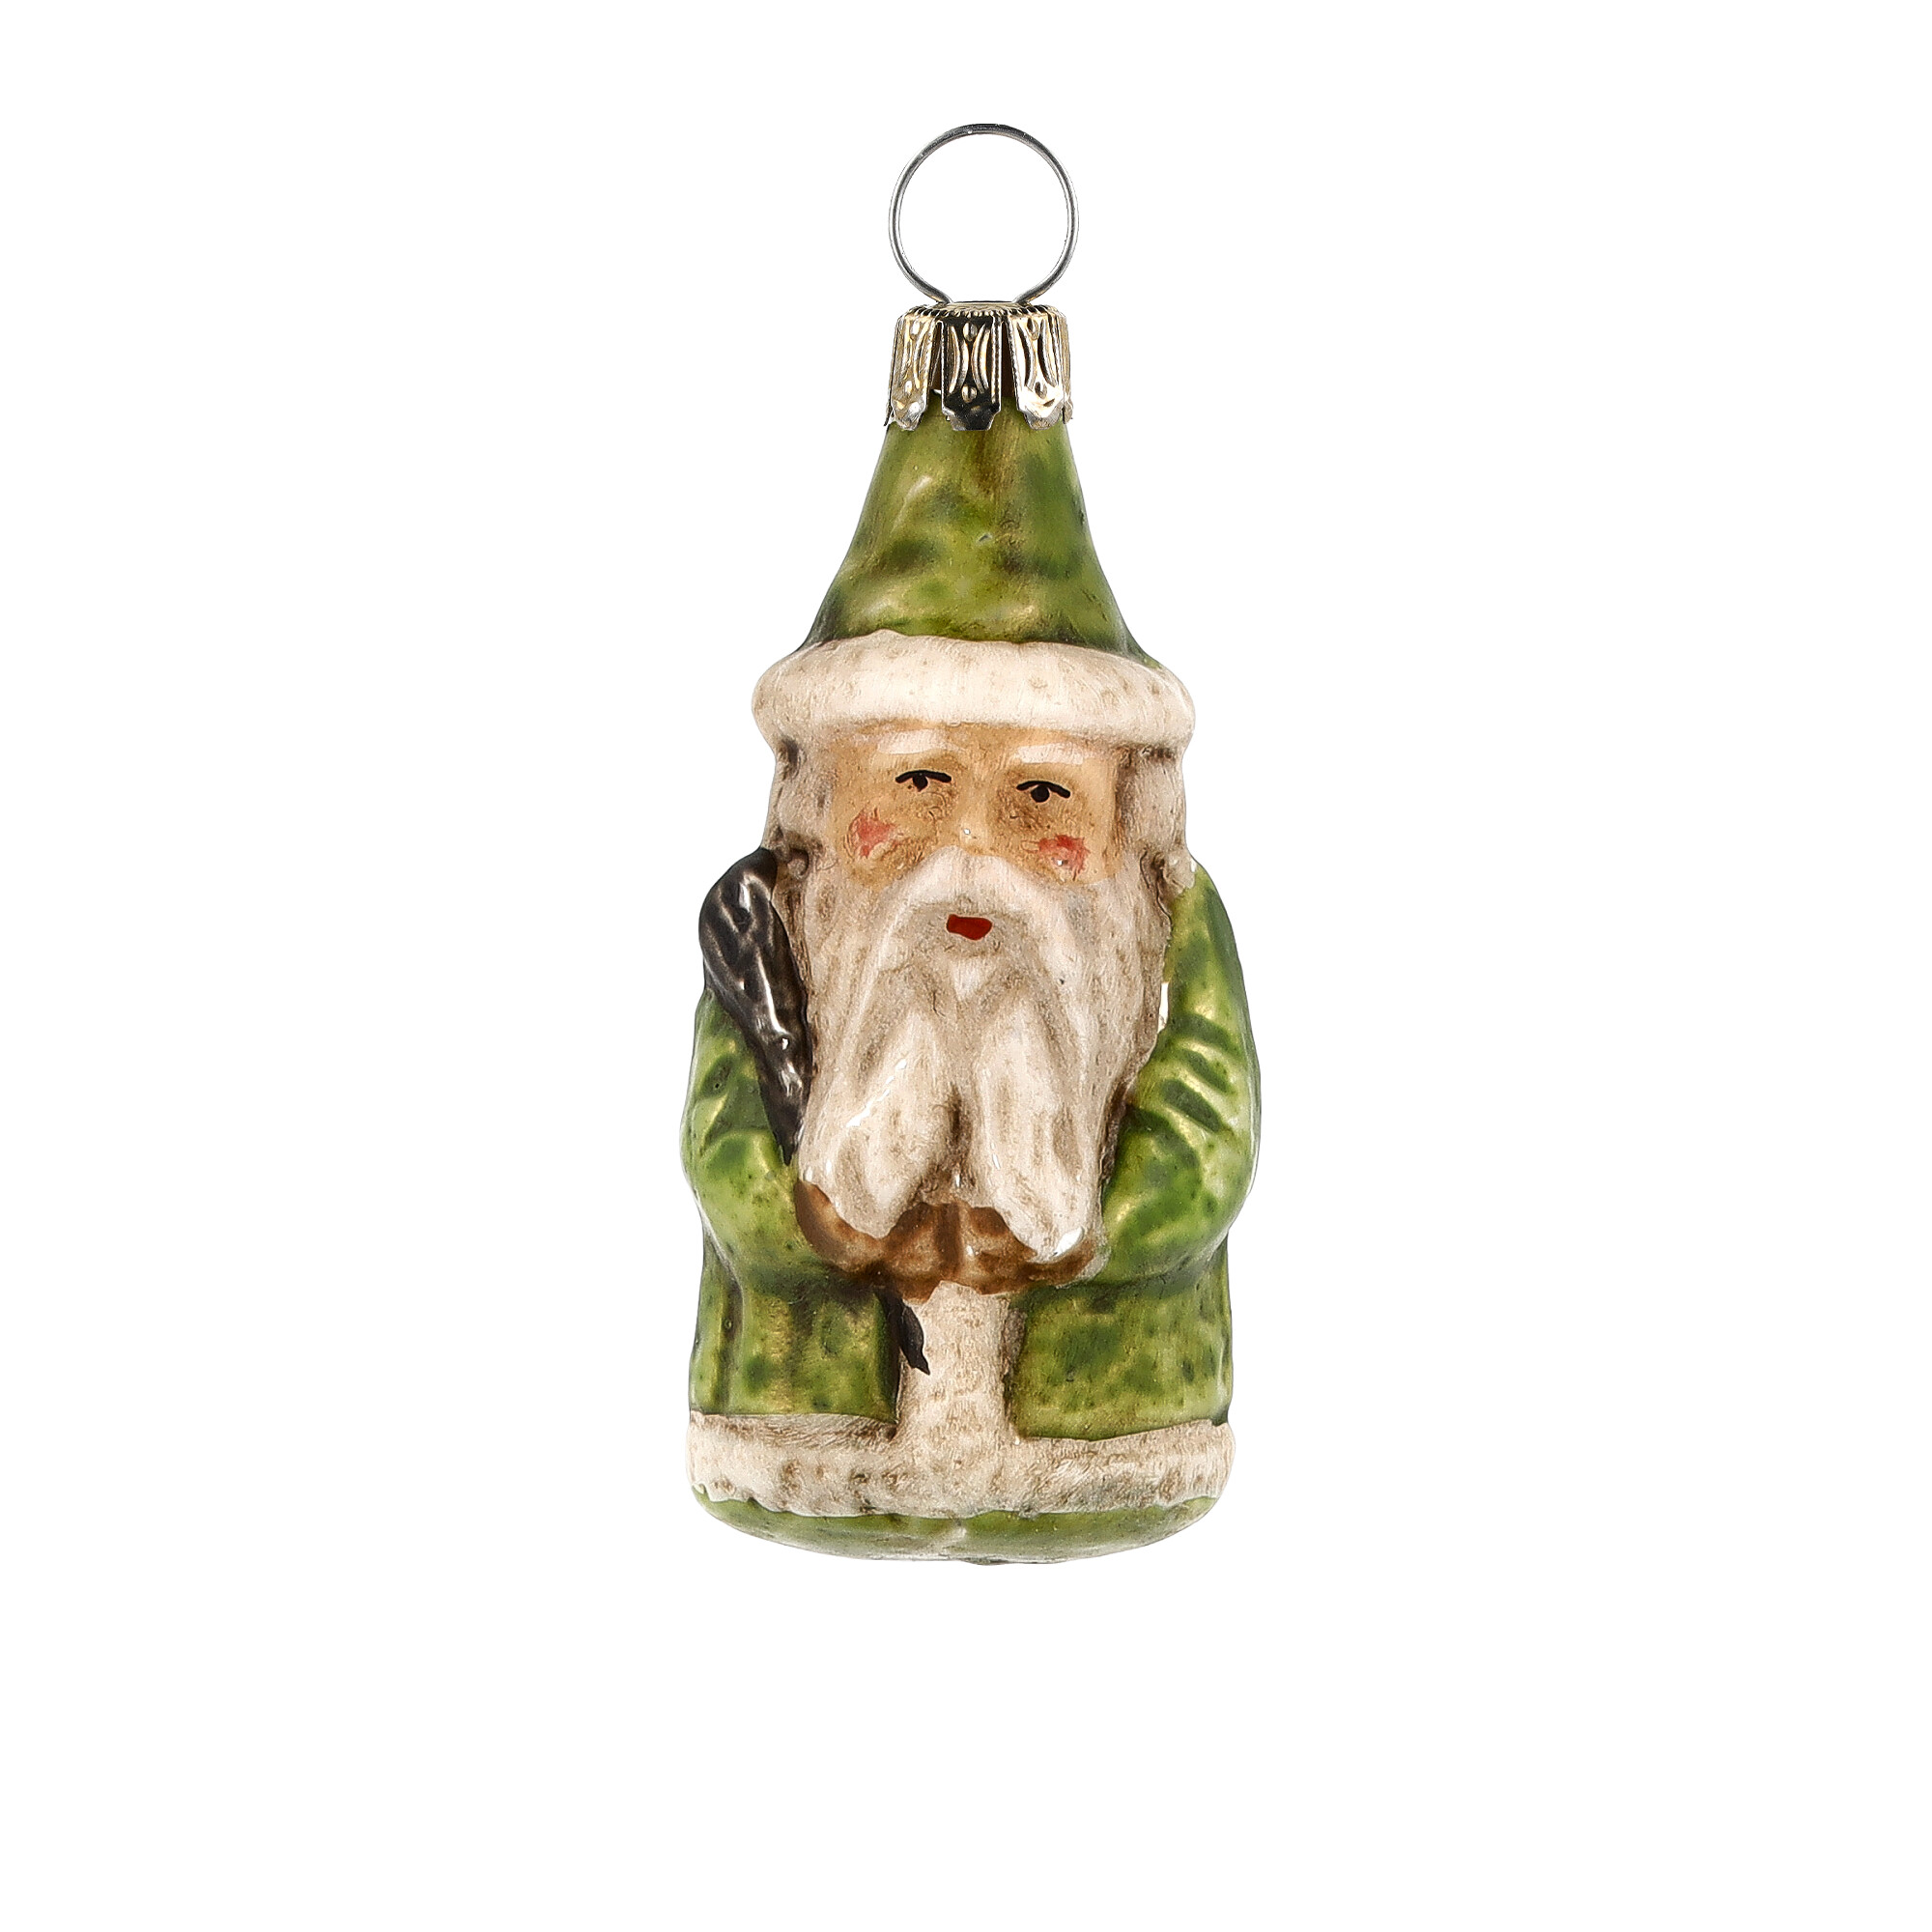 Retro Vintage style Christmas Glass Ornament - Miniature Santa green